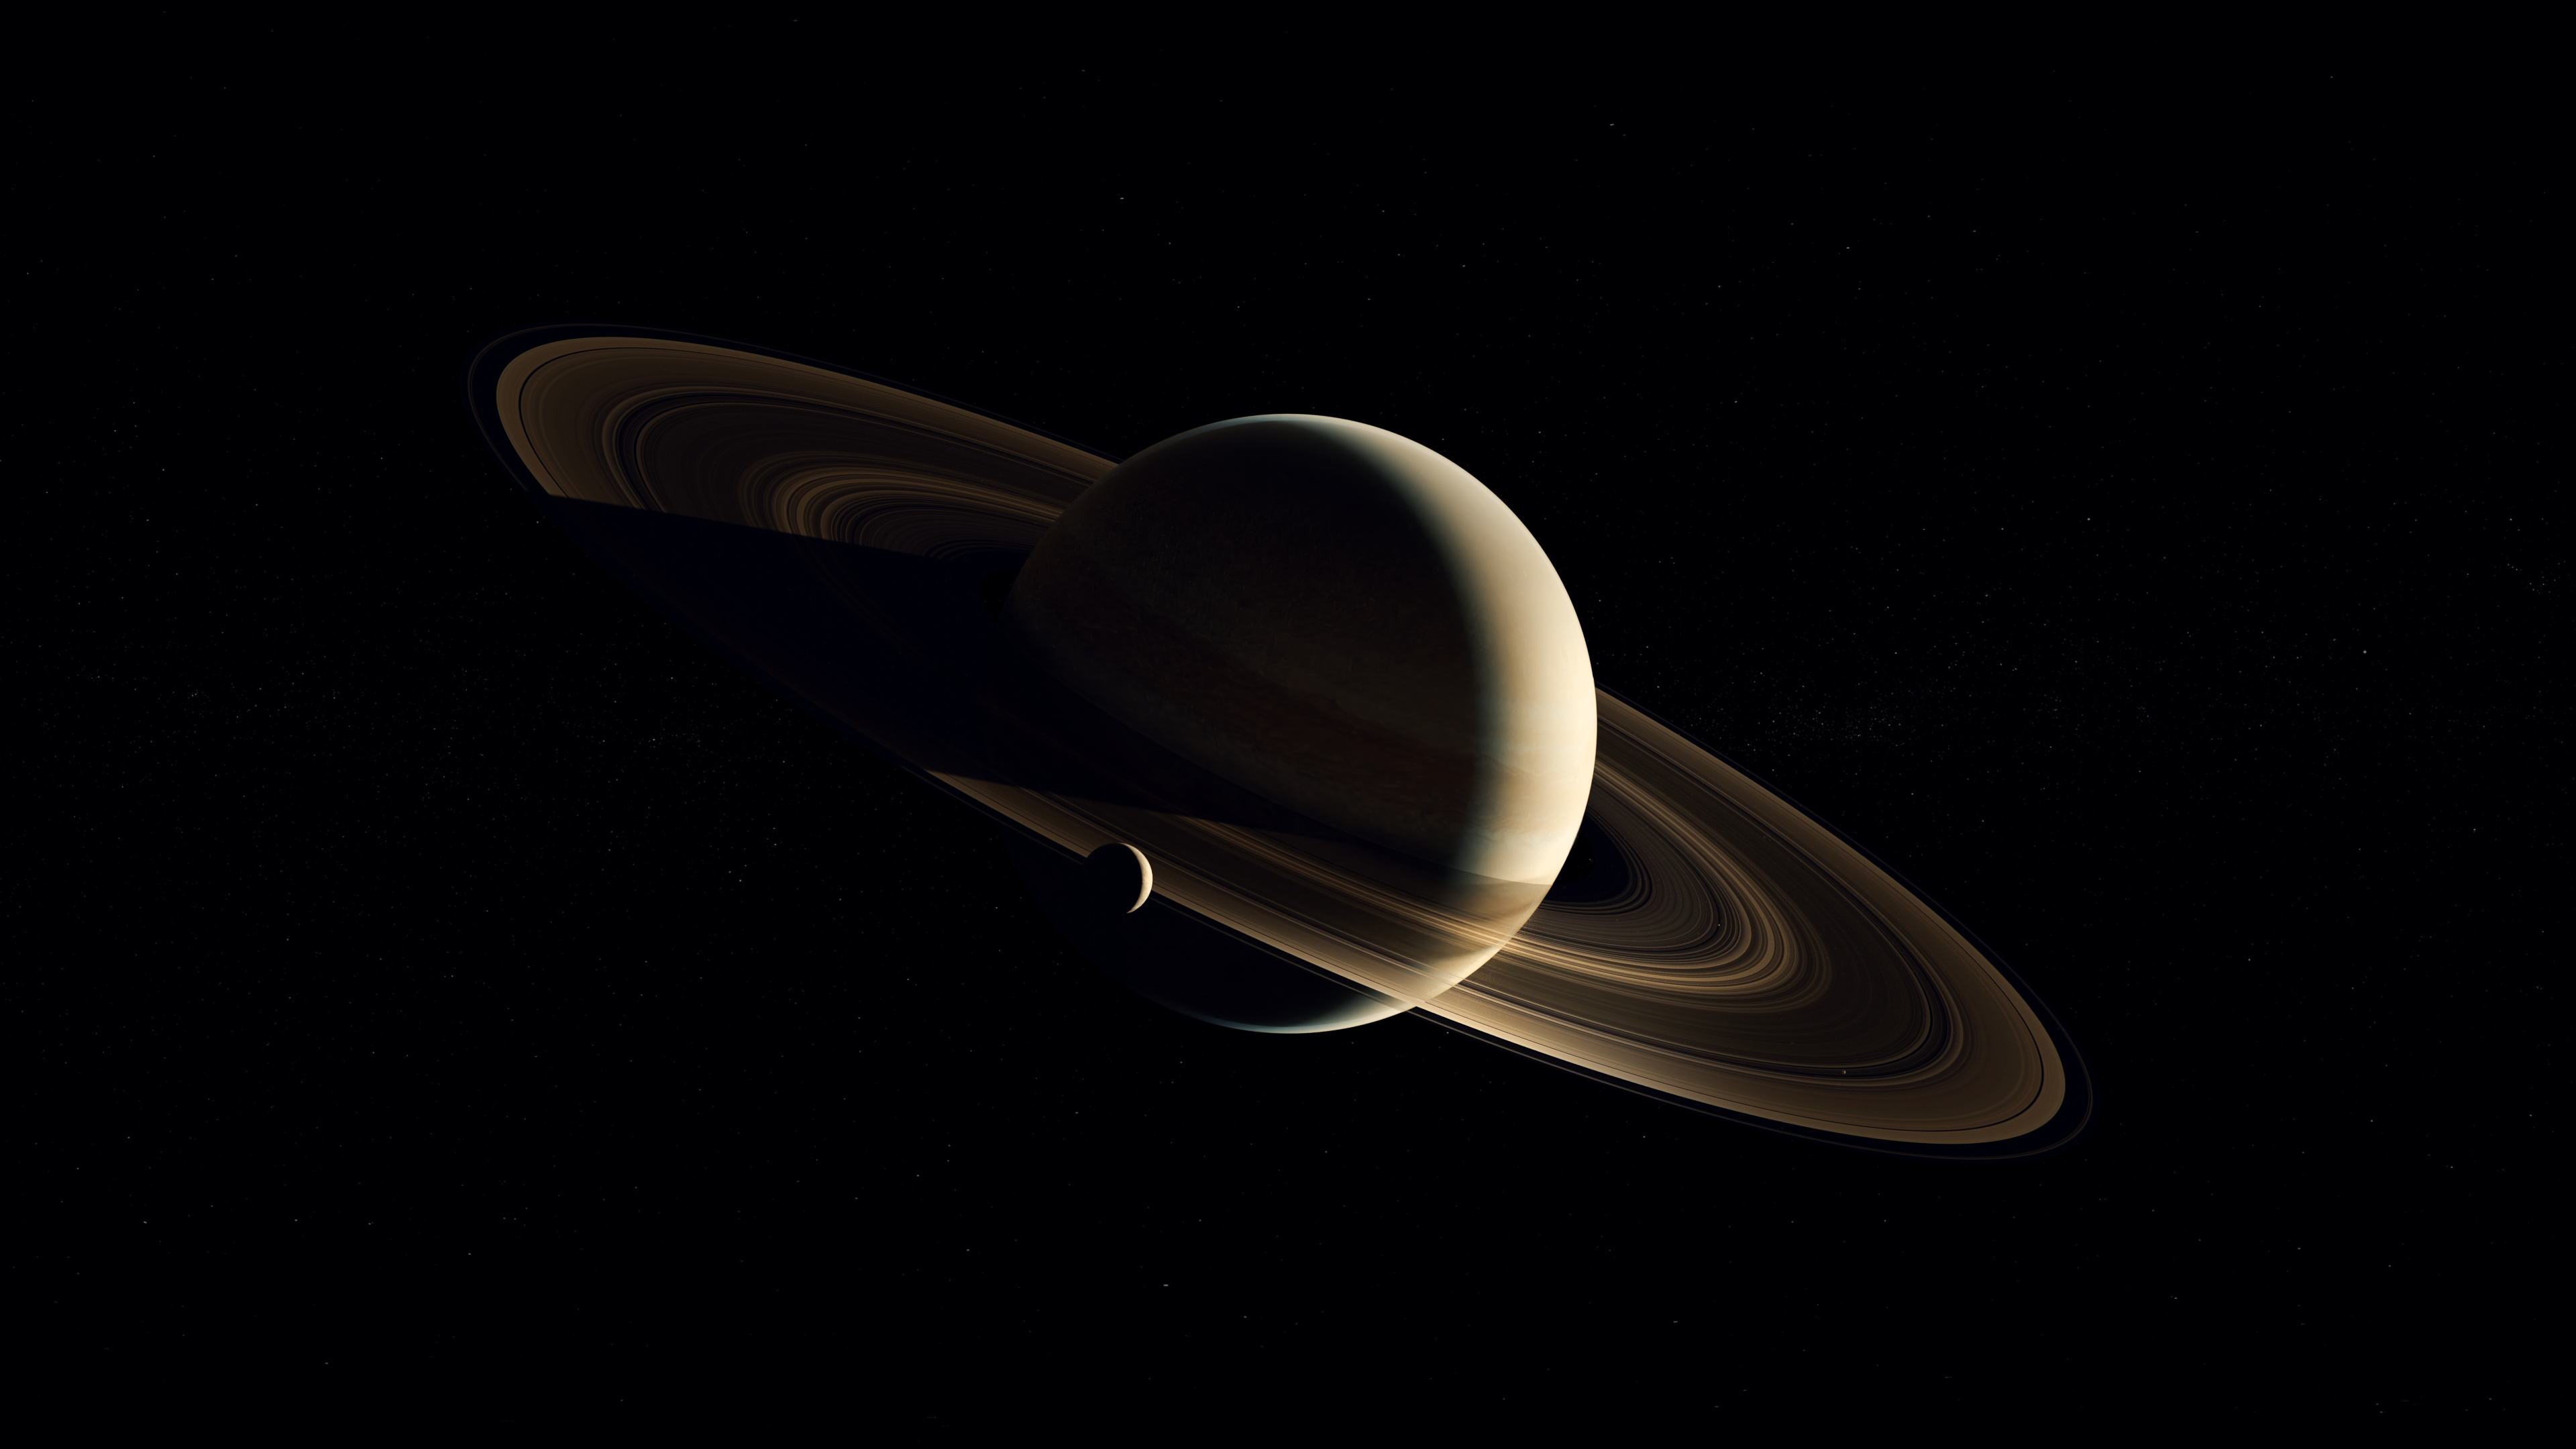 Sci Fi Saturn 4k Ultra HD Wallpaper Background Image